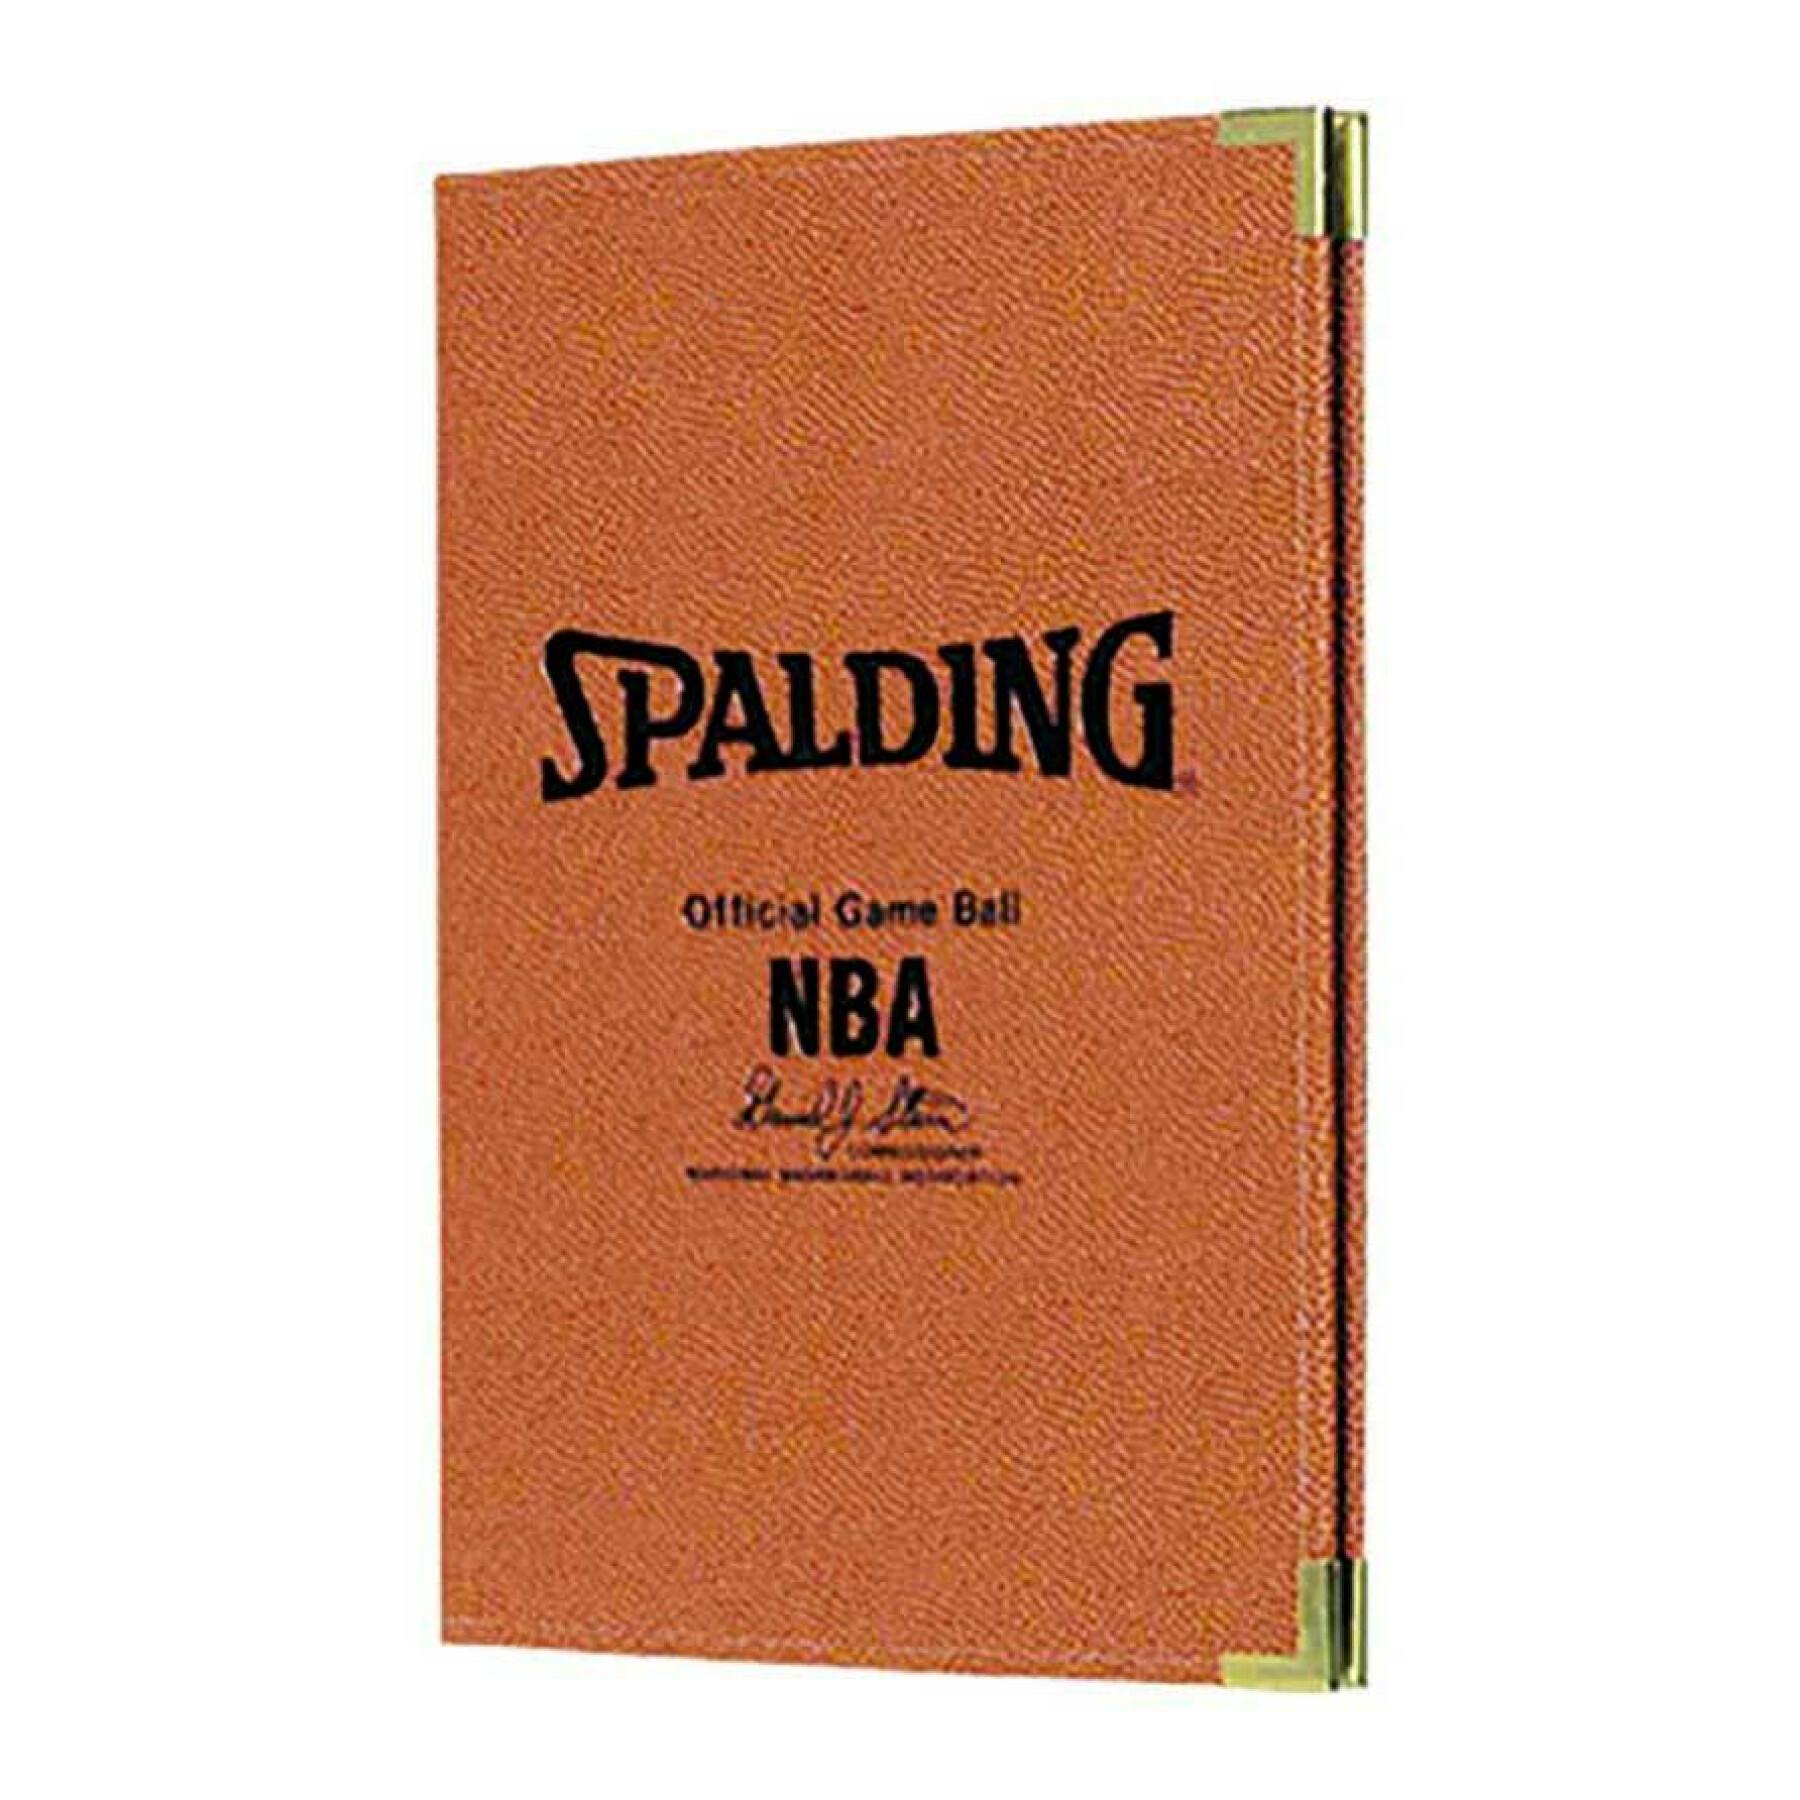 Aktentas Spalding Holder A4 (68-518z)